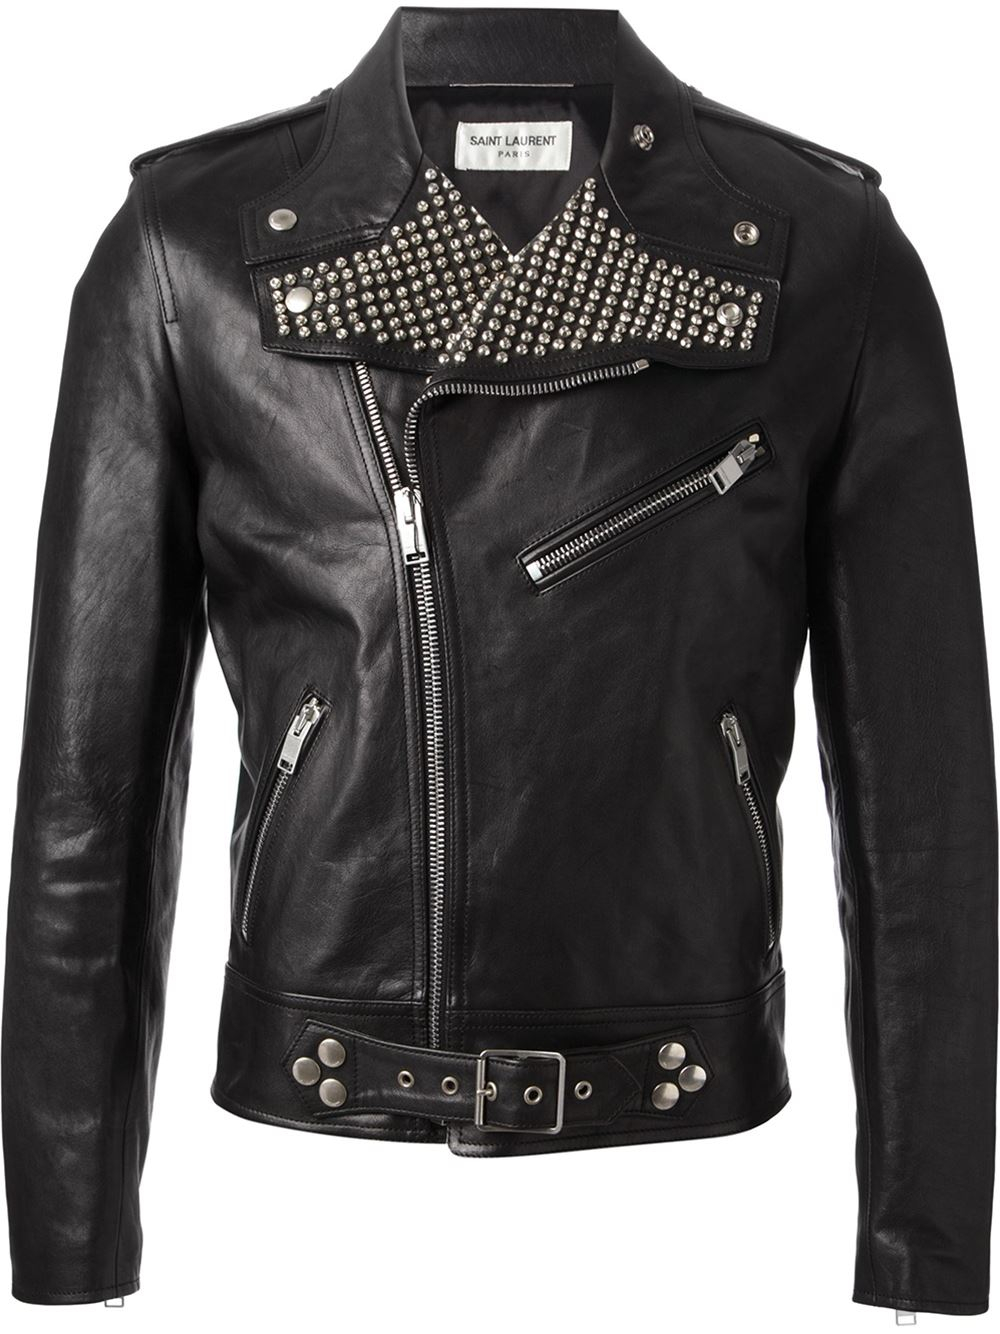 Lyst - Saint Laurent Studded Biker Jacket in Black for Men